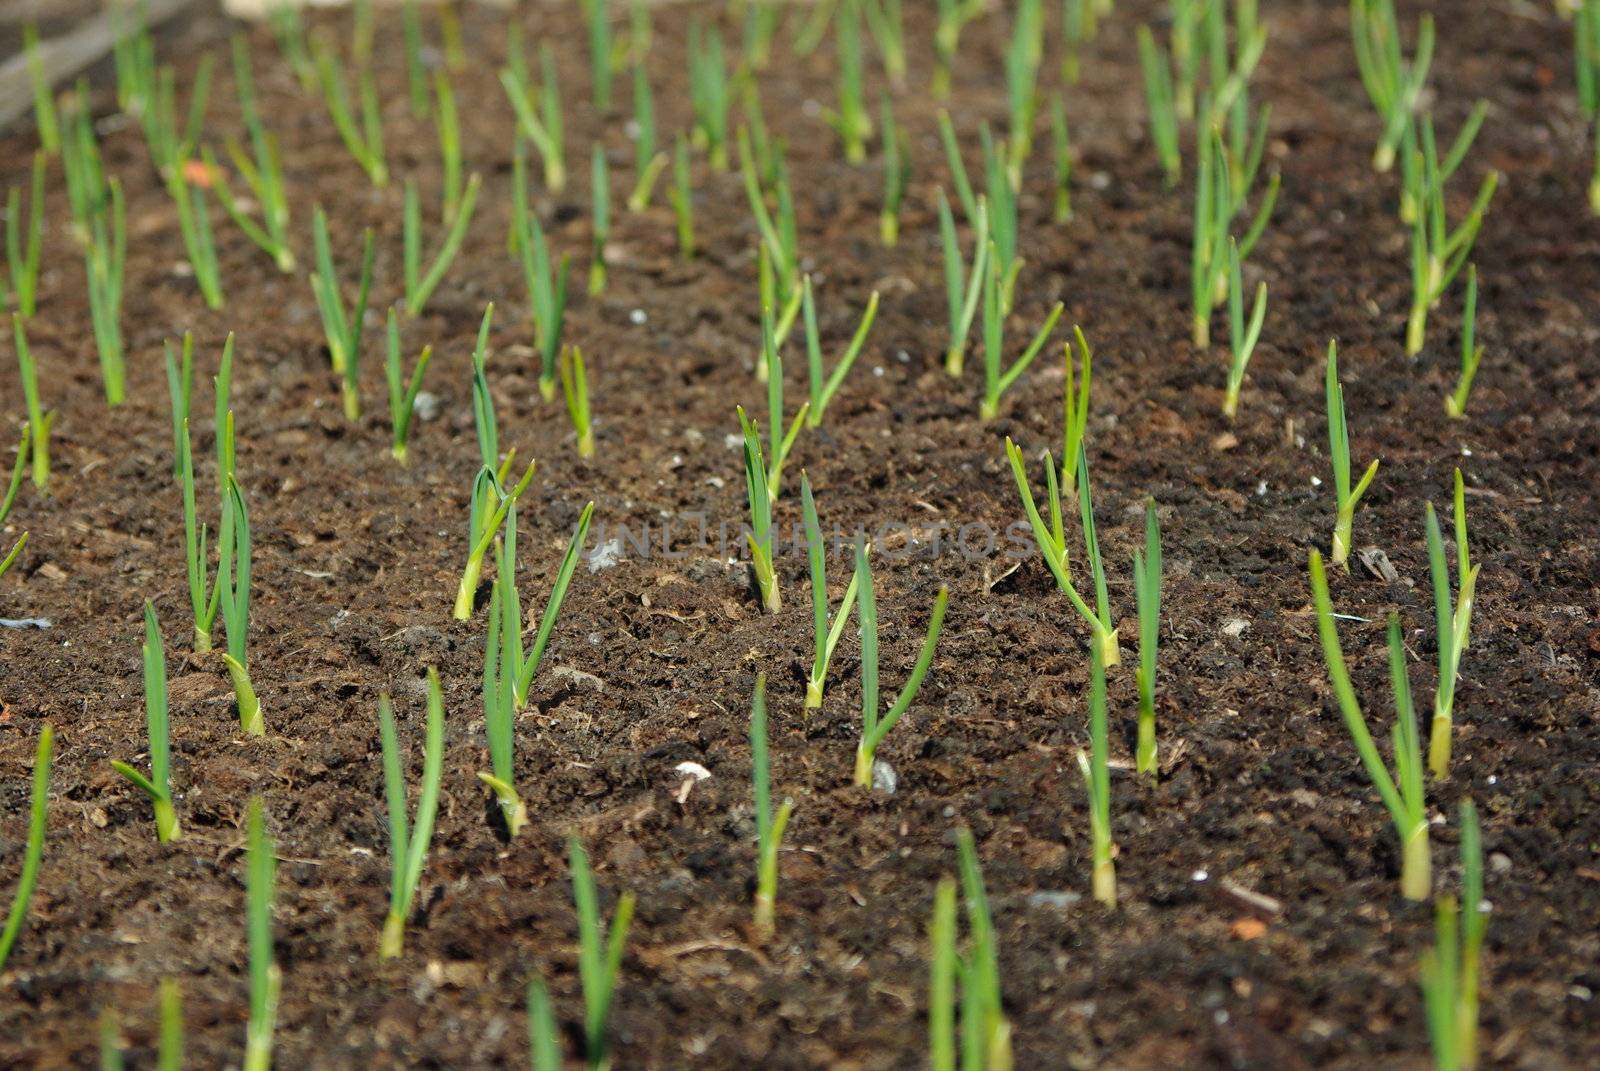 Rows of garlic plants seedlings in spring garden bed